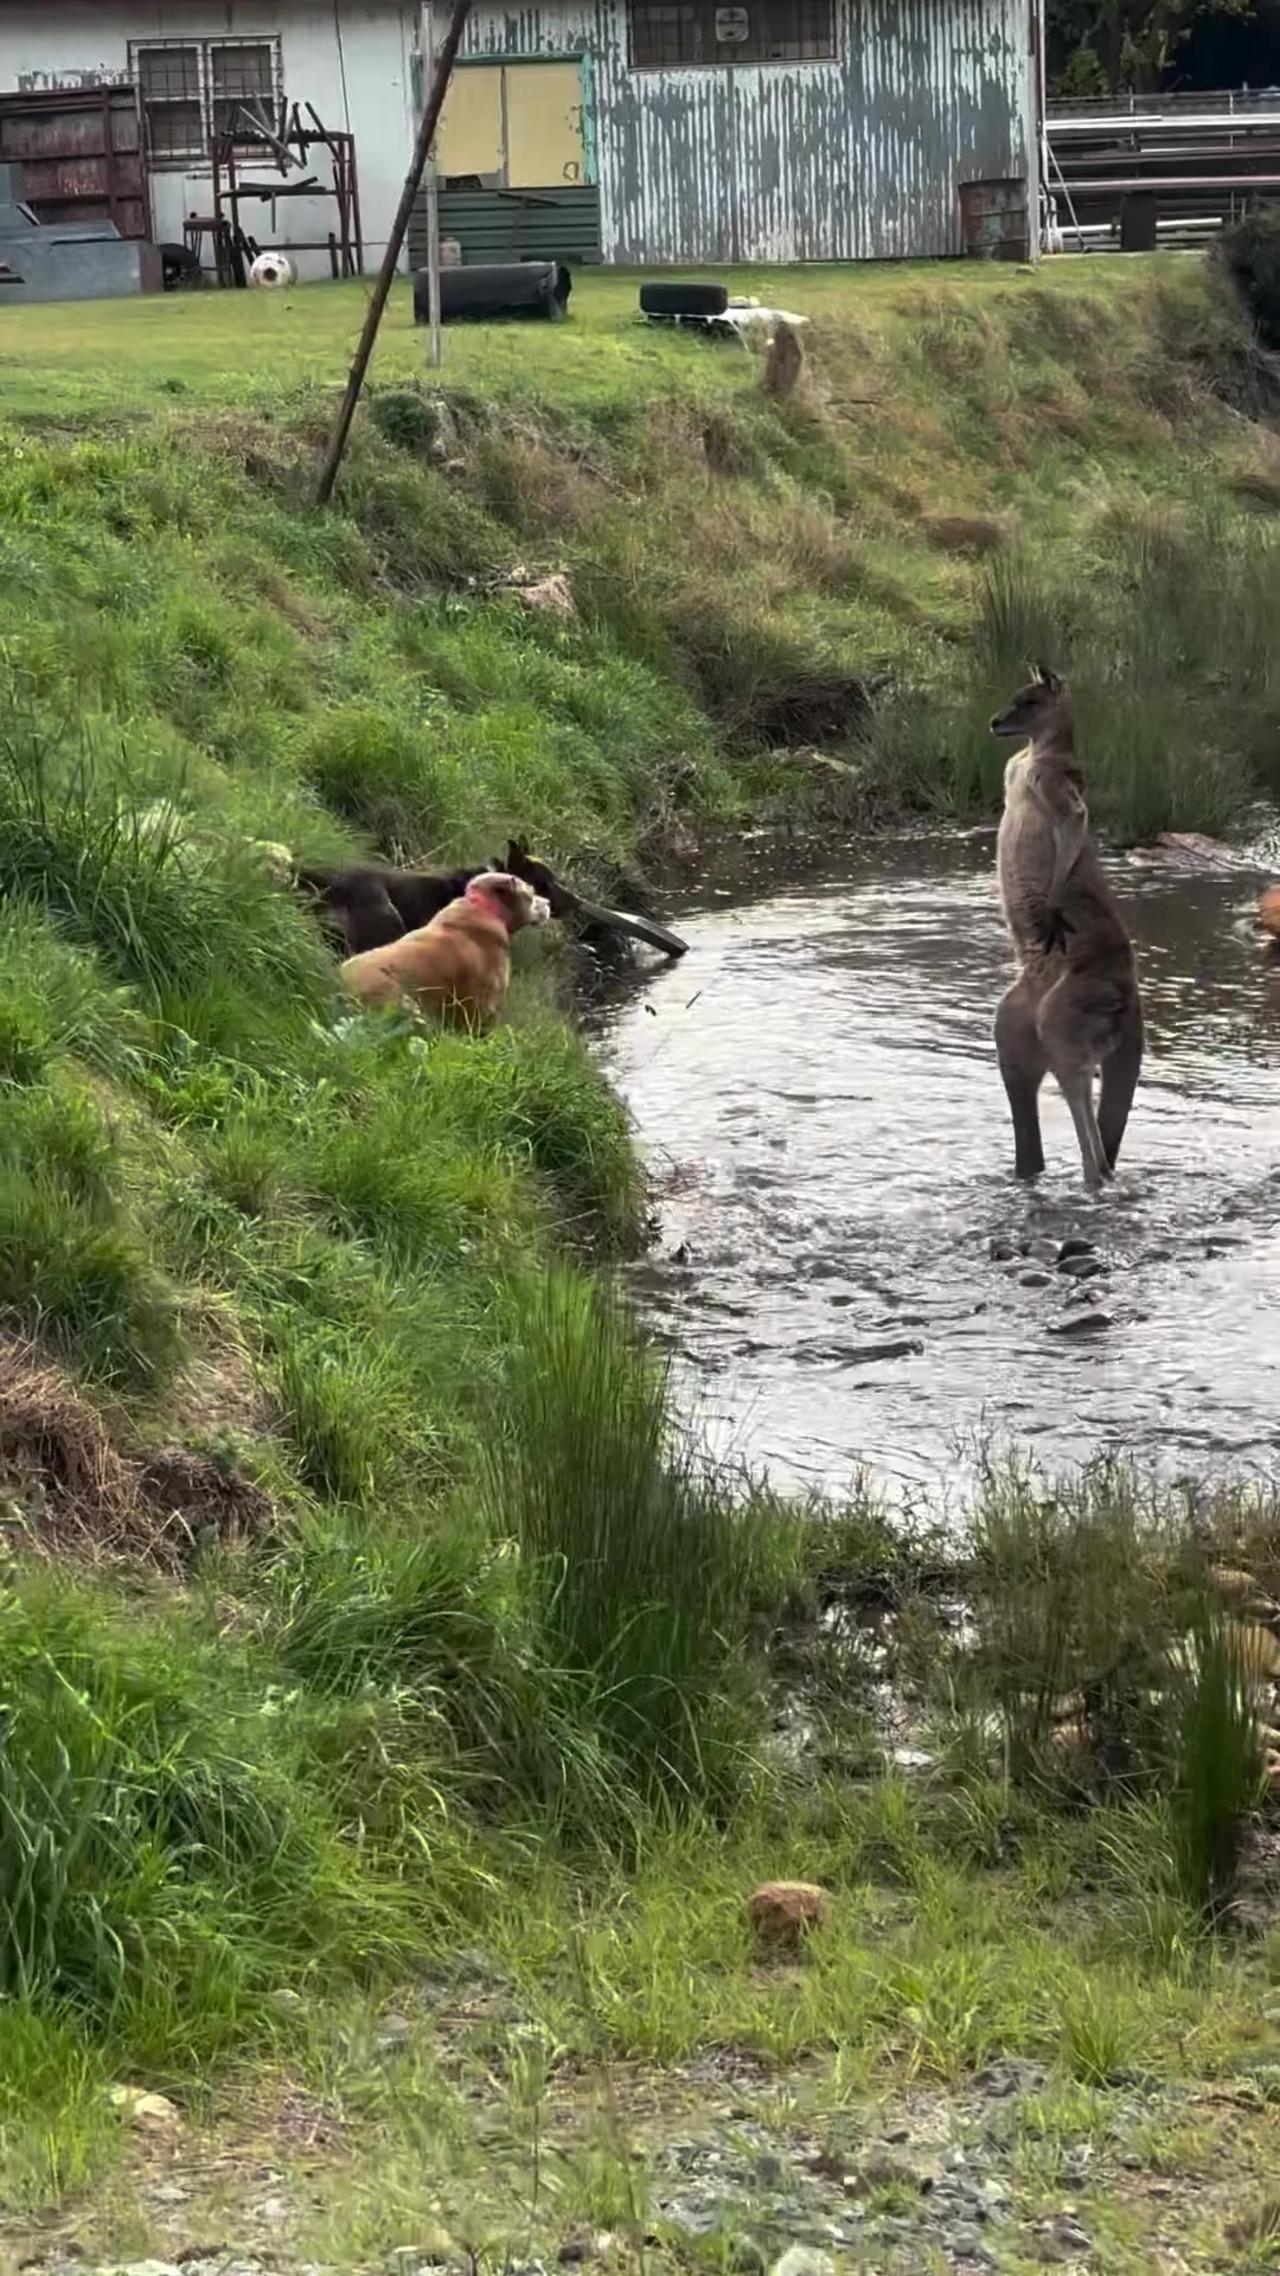 Dogs Encounter Kangaroo While on a Walk